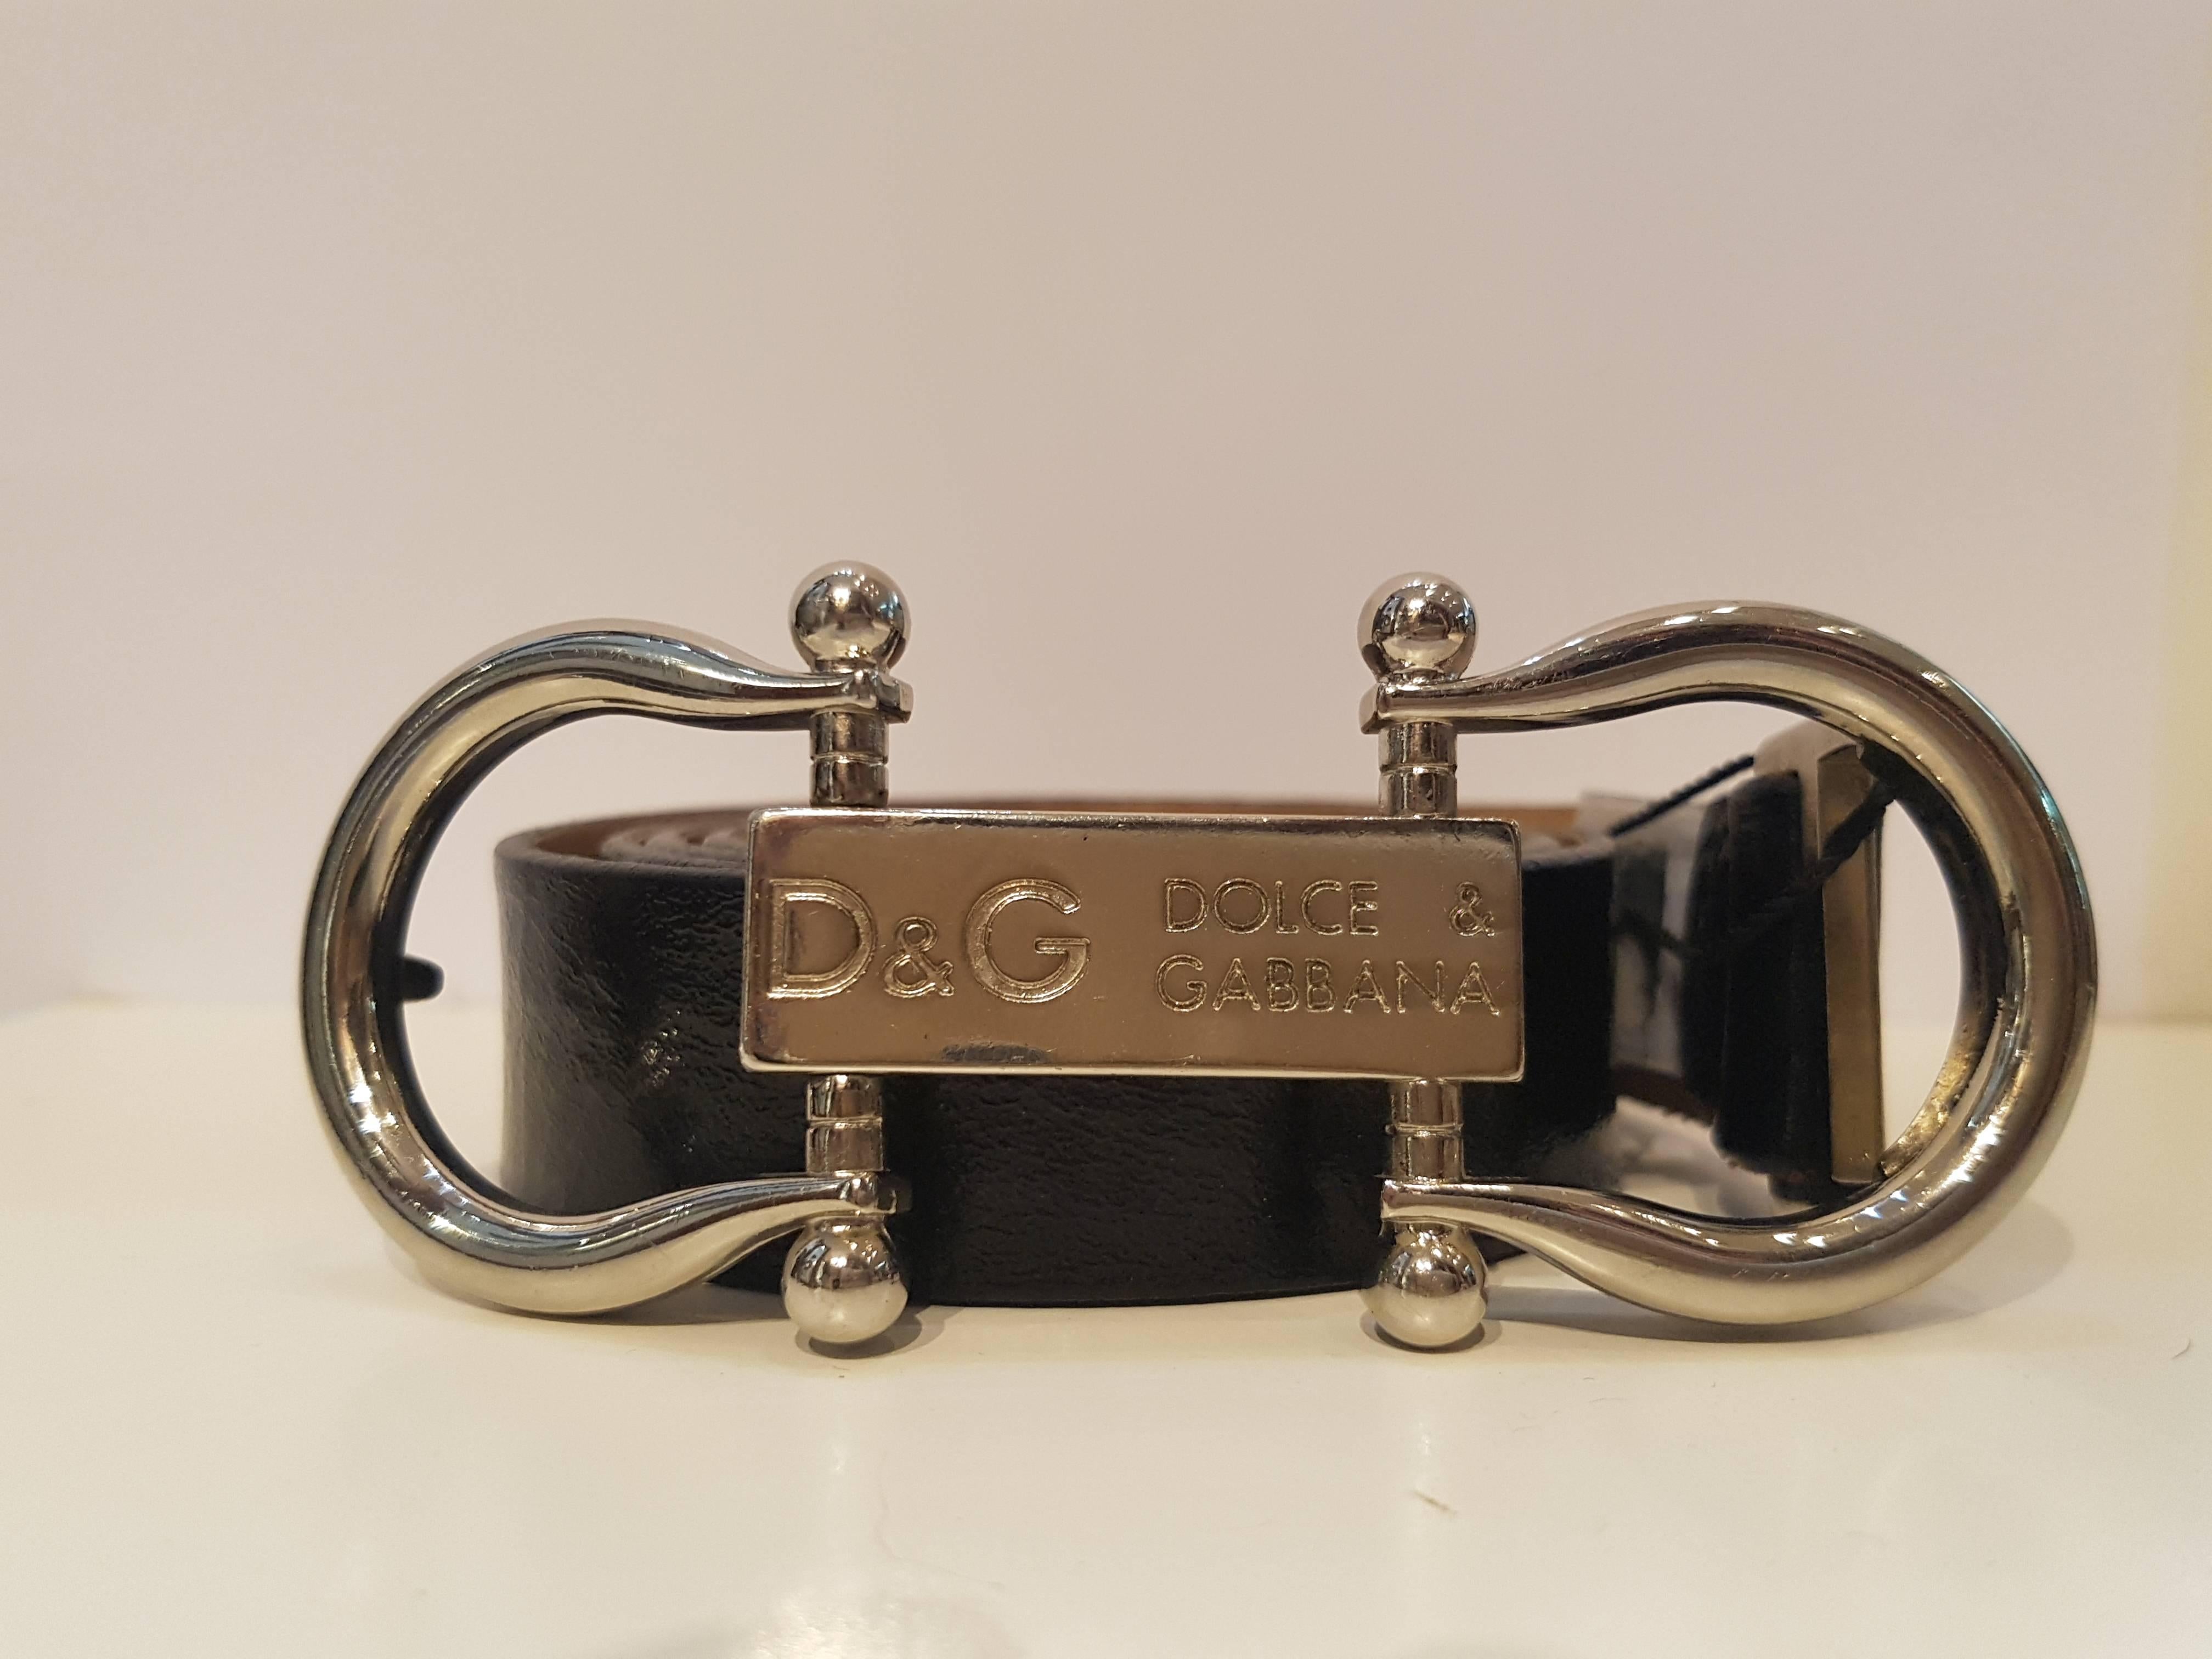  Dolce & Gabbana Black leather belt with silver hardware